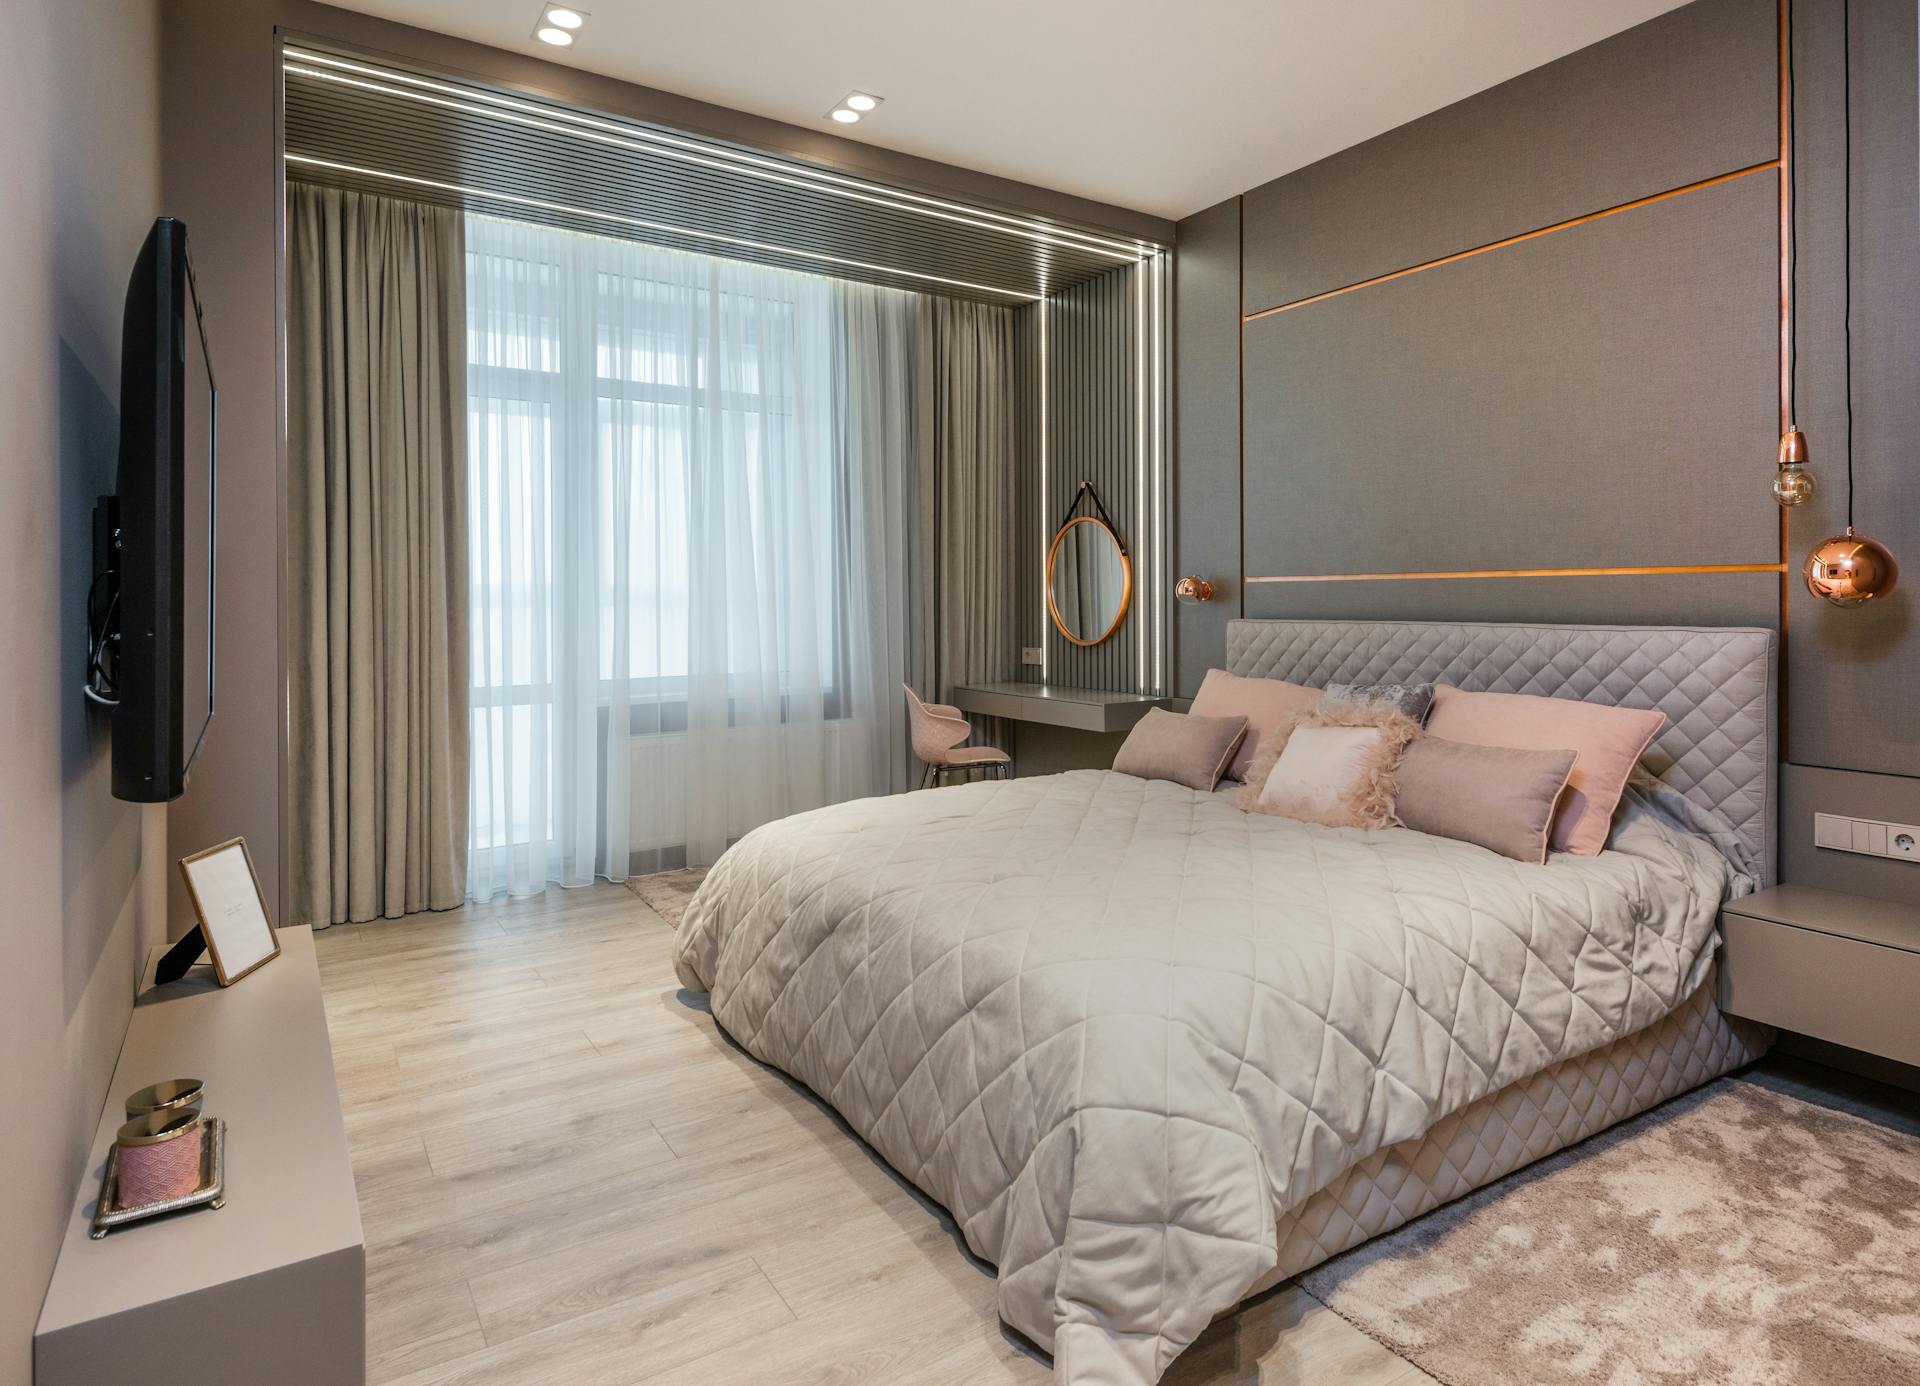 A stylish bedroom interior | Source: Pexels